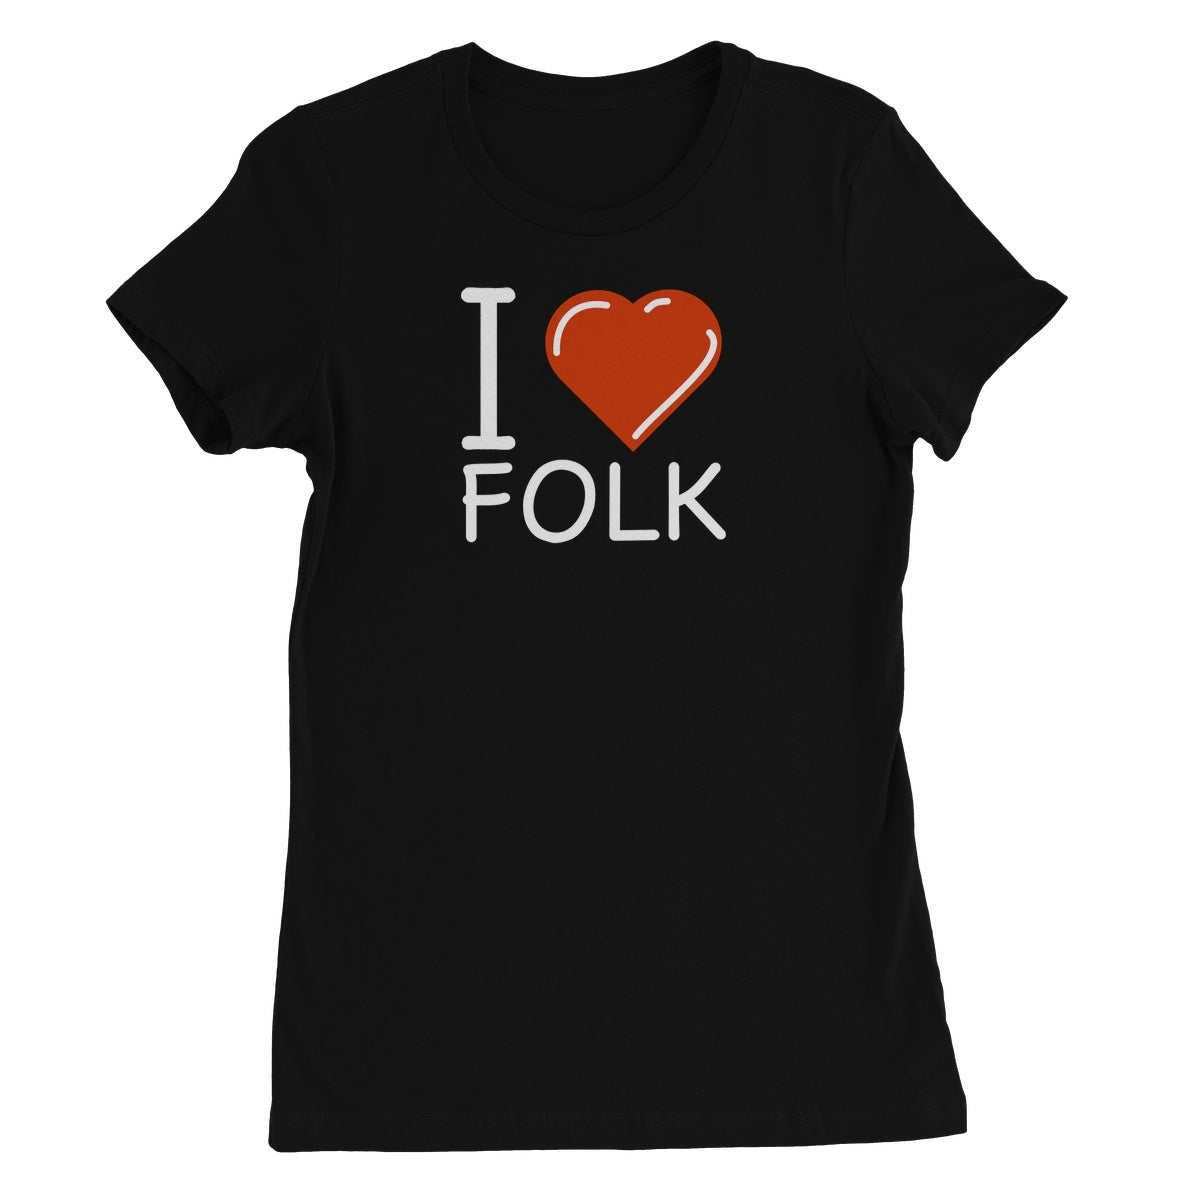 I Love Folk Women's T-Shirt